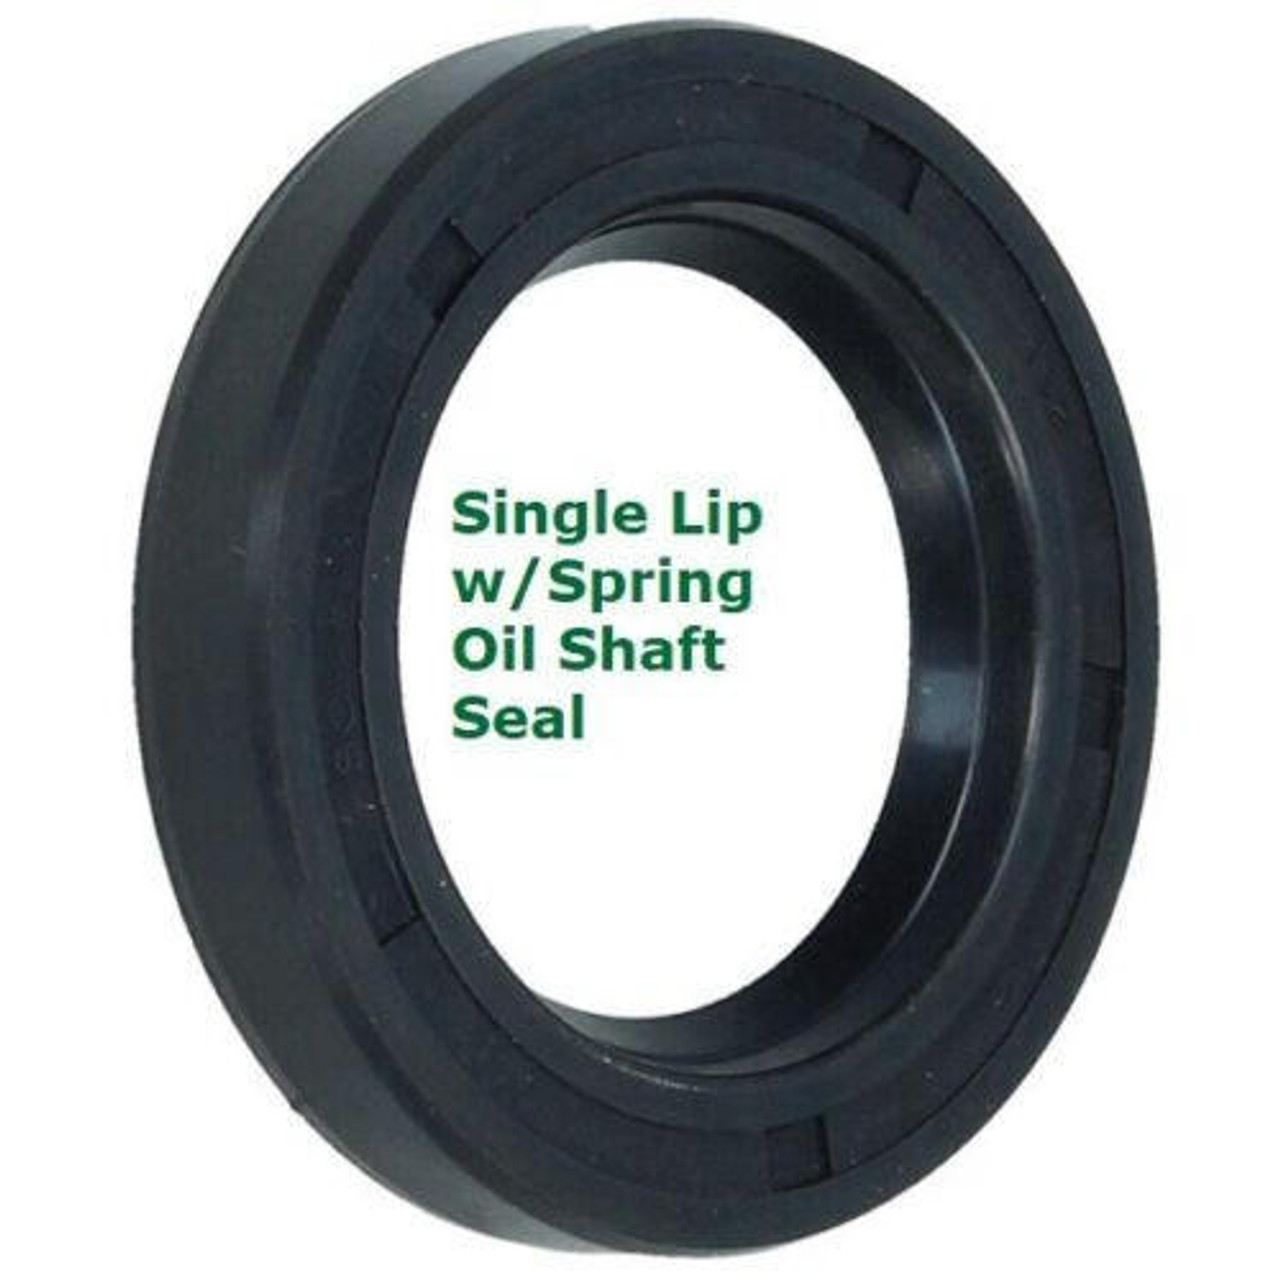 Metric Oil Shaft Seal 270 x 310 x 15mm   Single Lip   Price for 1 pc